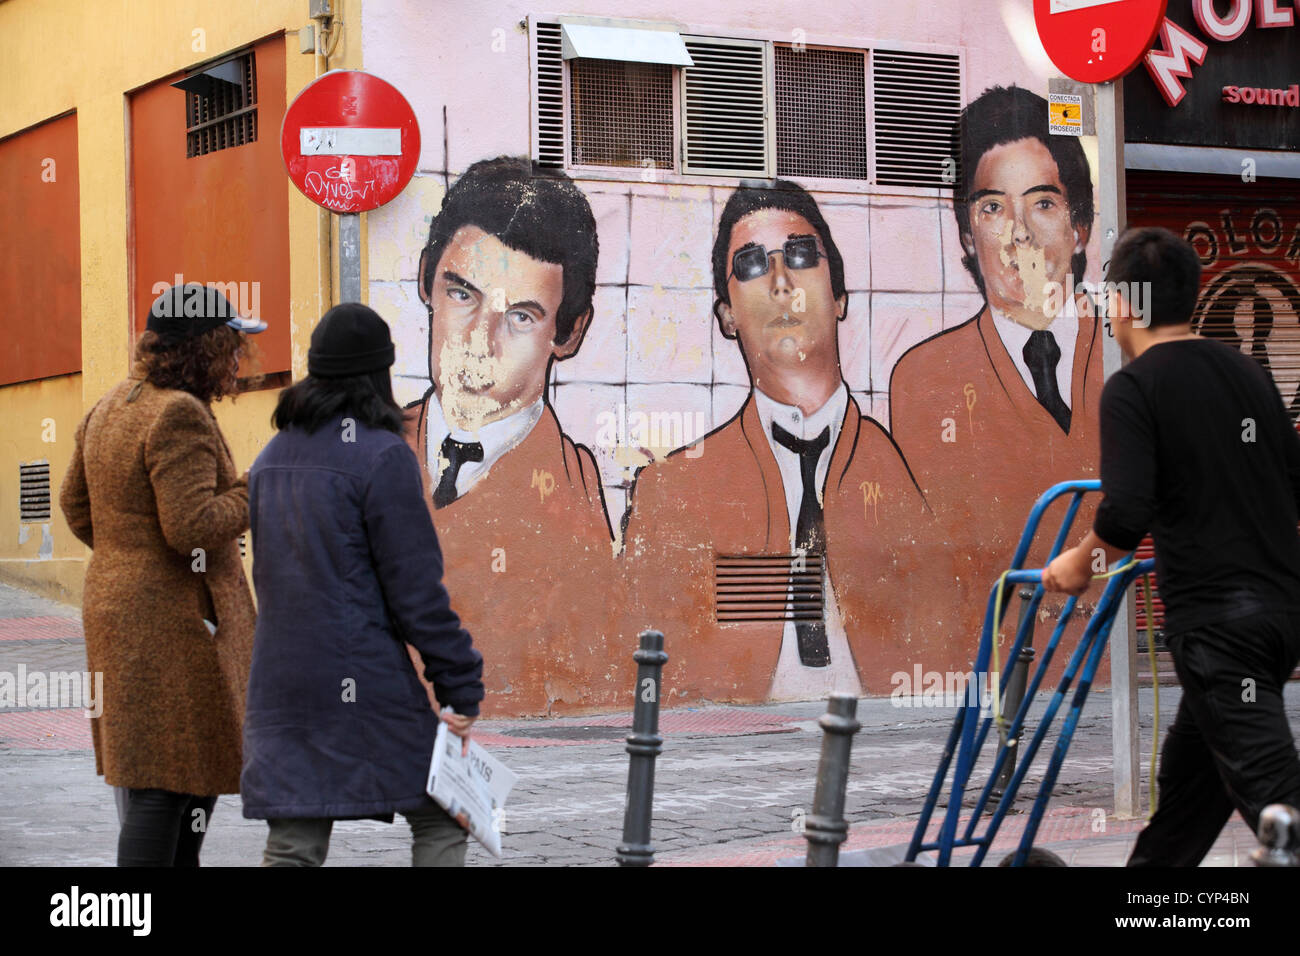 Mural antiguo, representando a los miembros de la mermelada, 1970 mod band, Paul Weller, Madrid, España Foto de stock